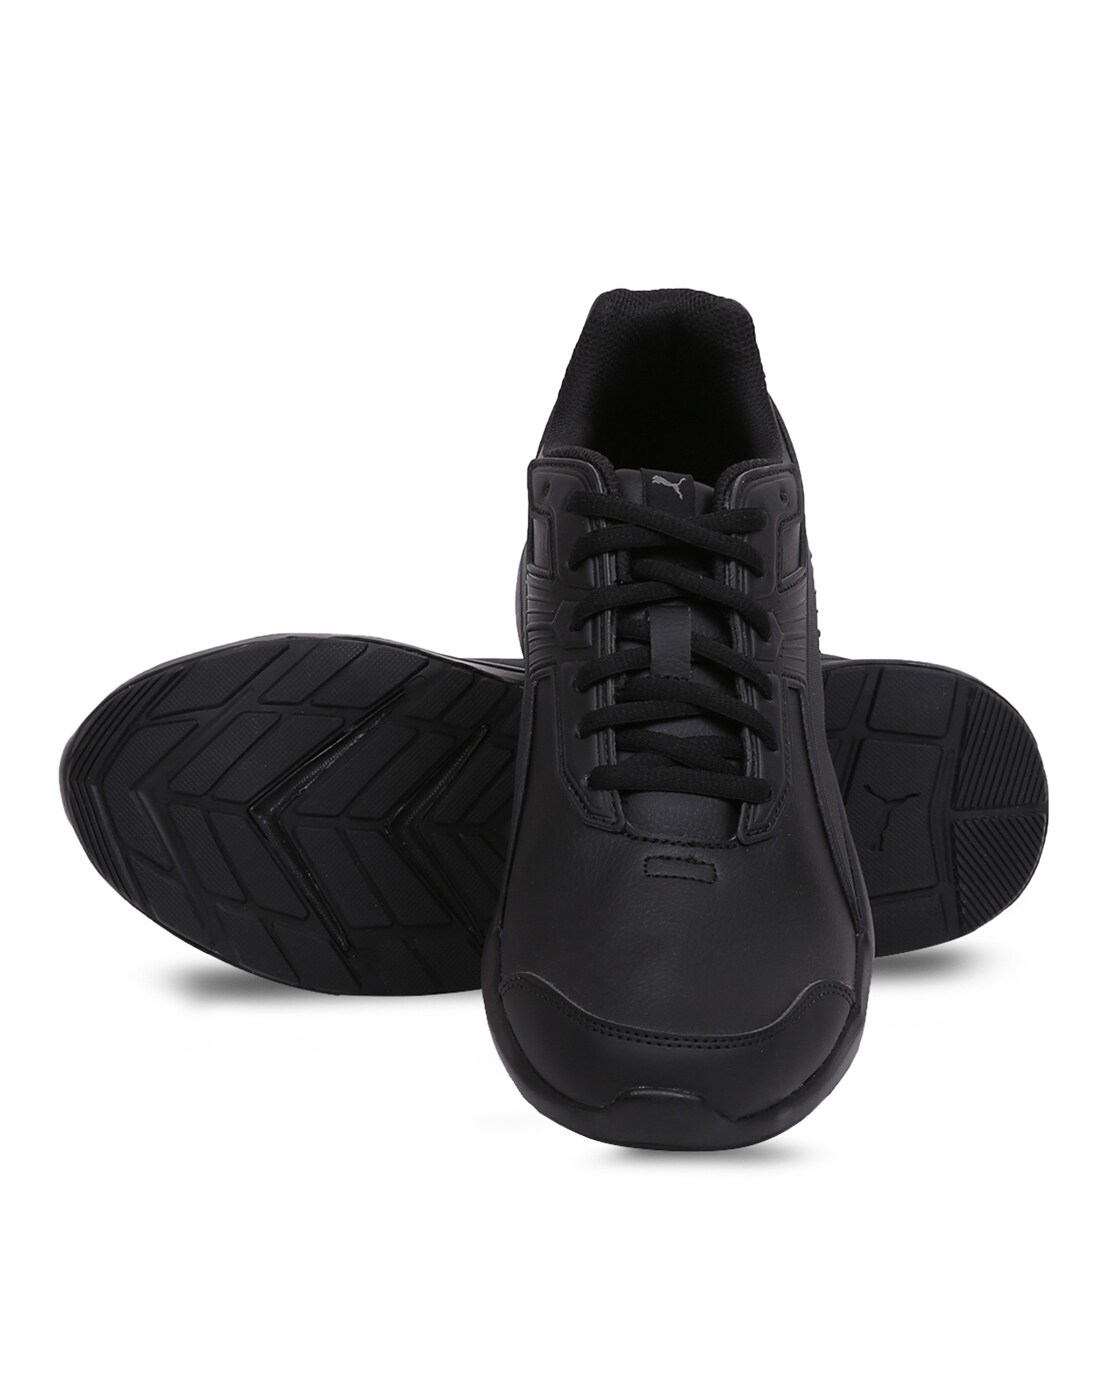 full black sneakers